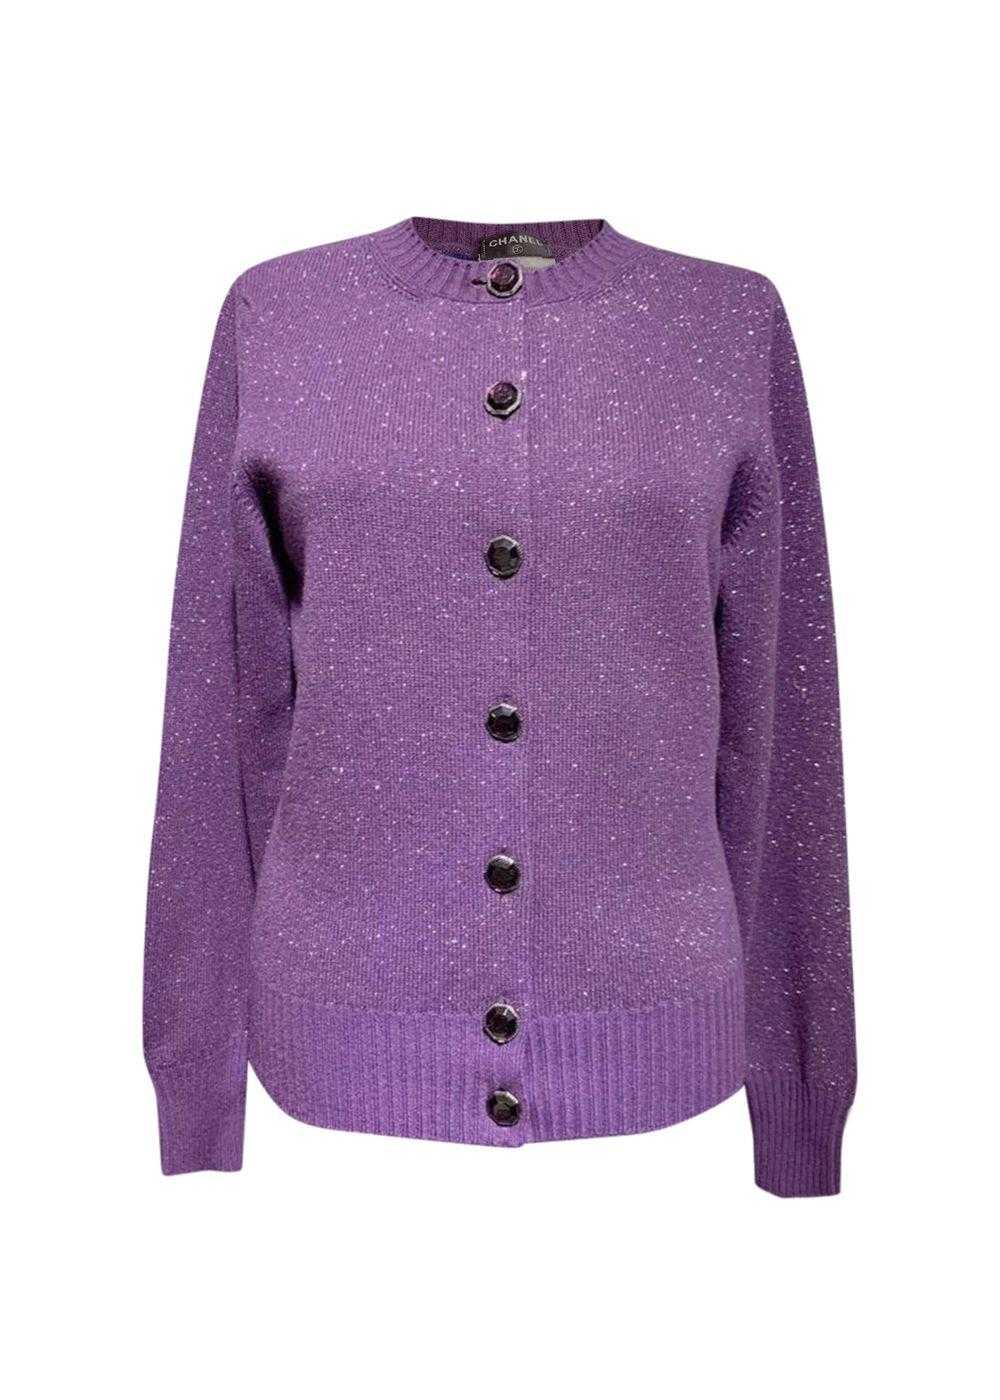 Chanel Purple Metallic Knit Cashmere Cardigan - image 1